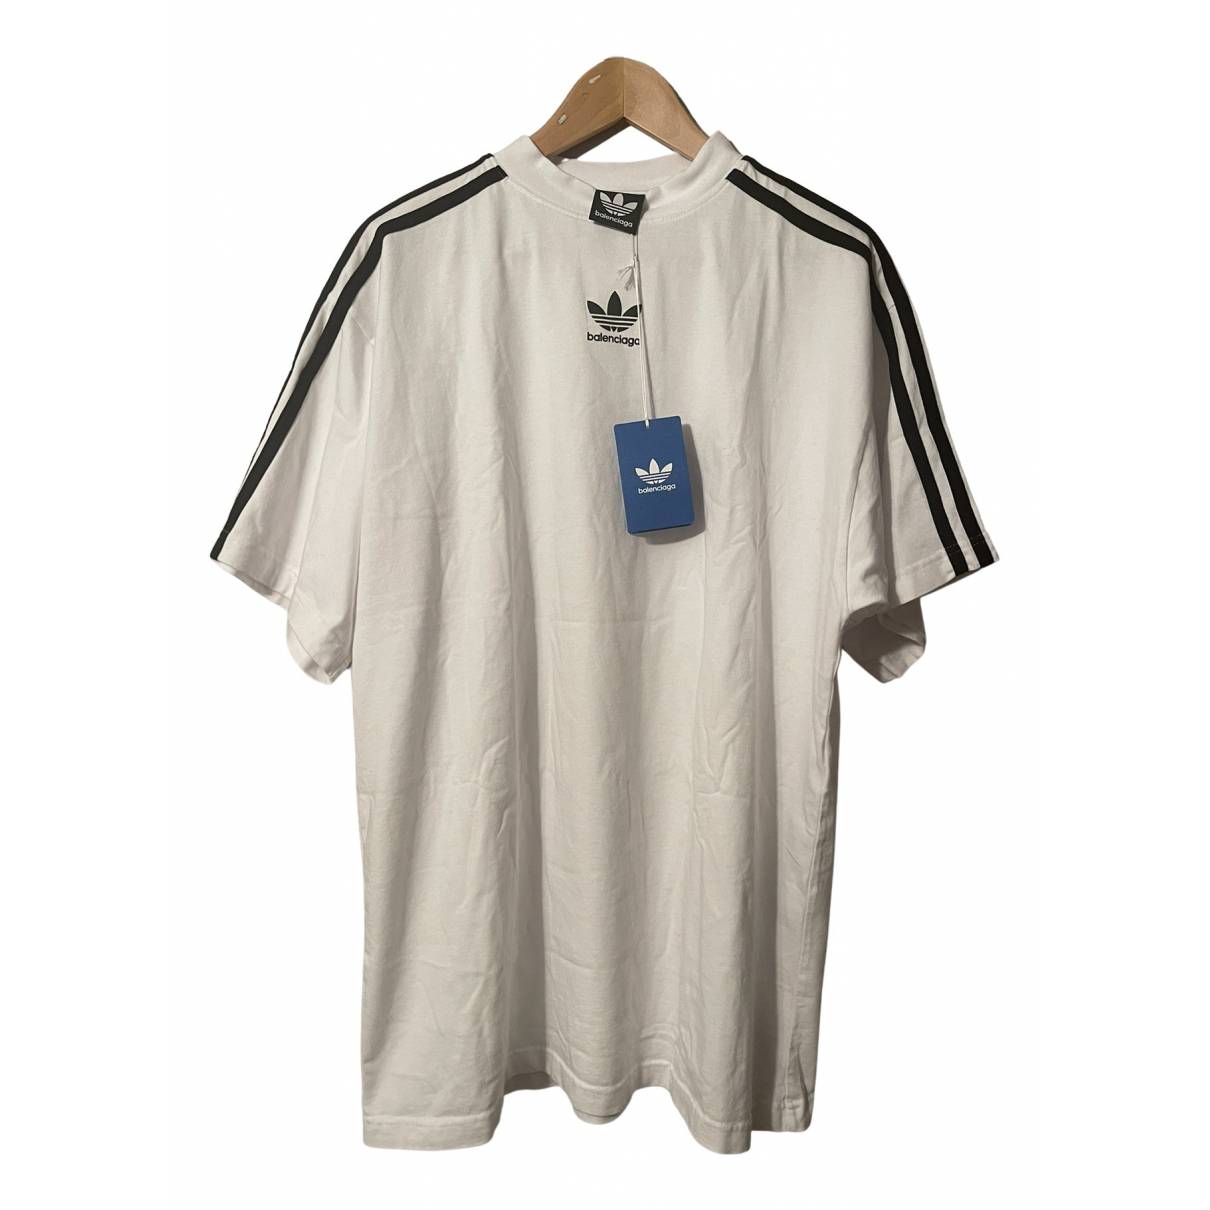 T-shirt Balenciaga X Adidas White size L International in Cotton